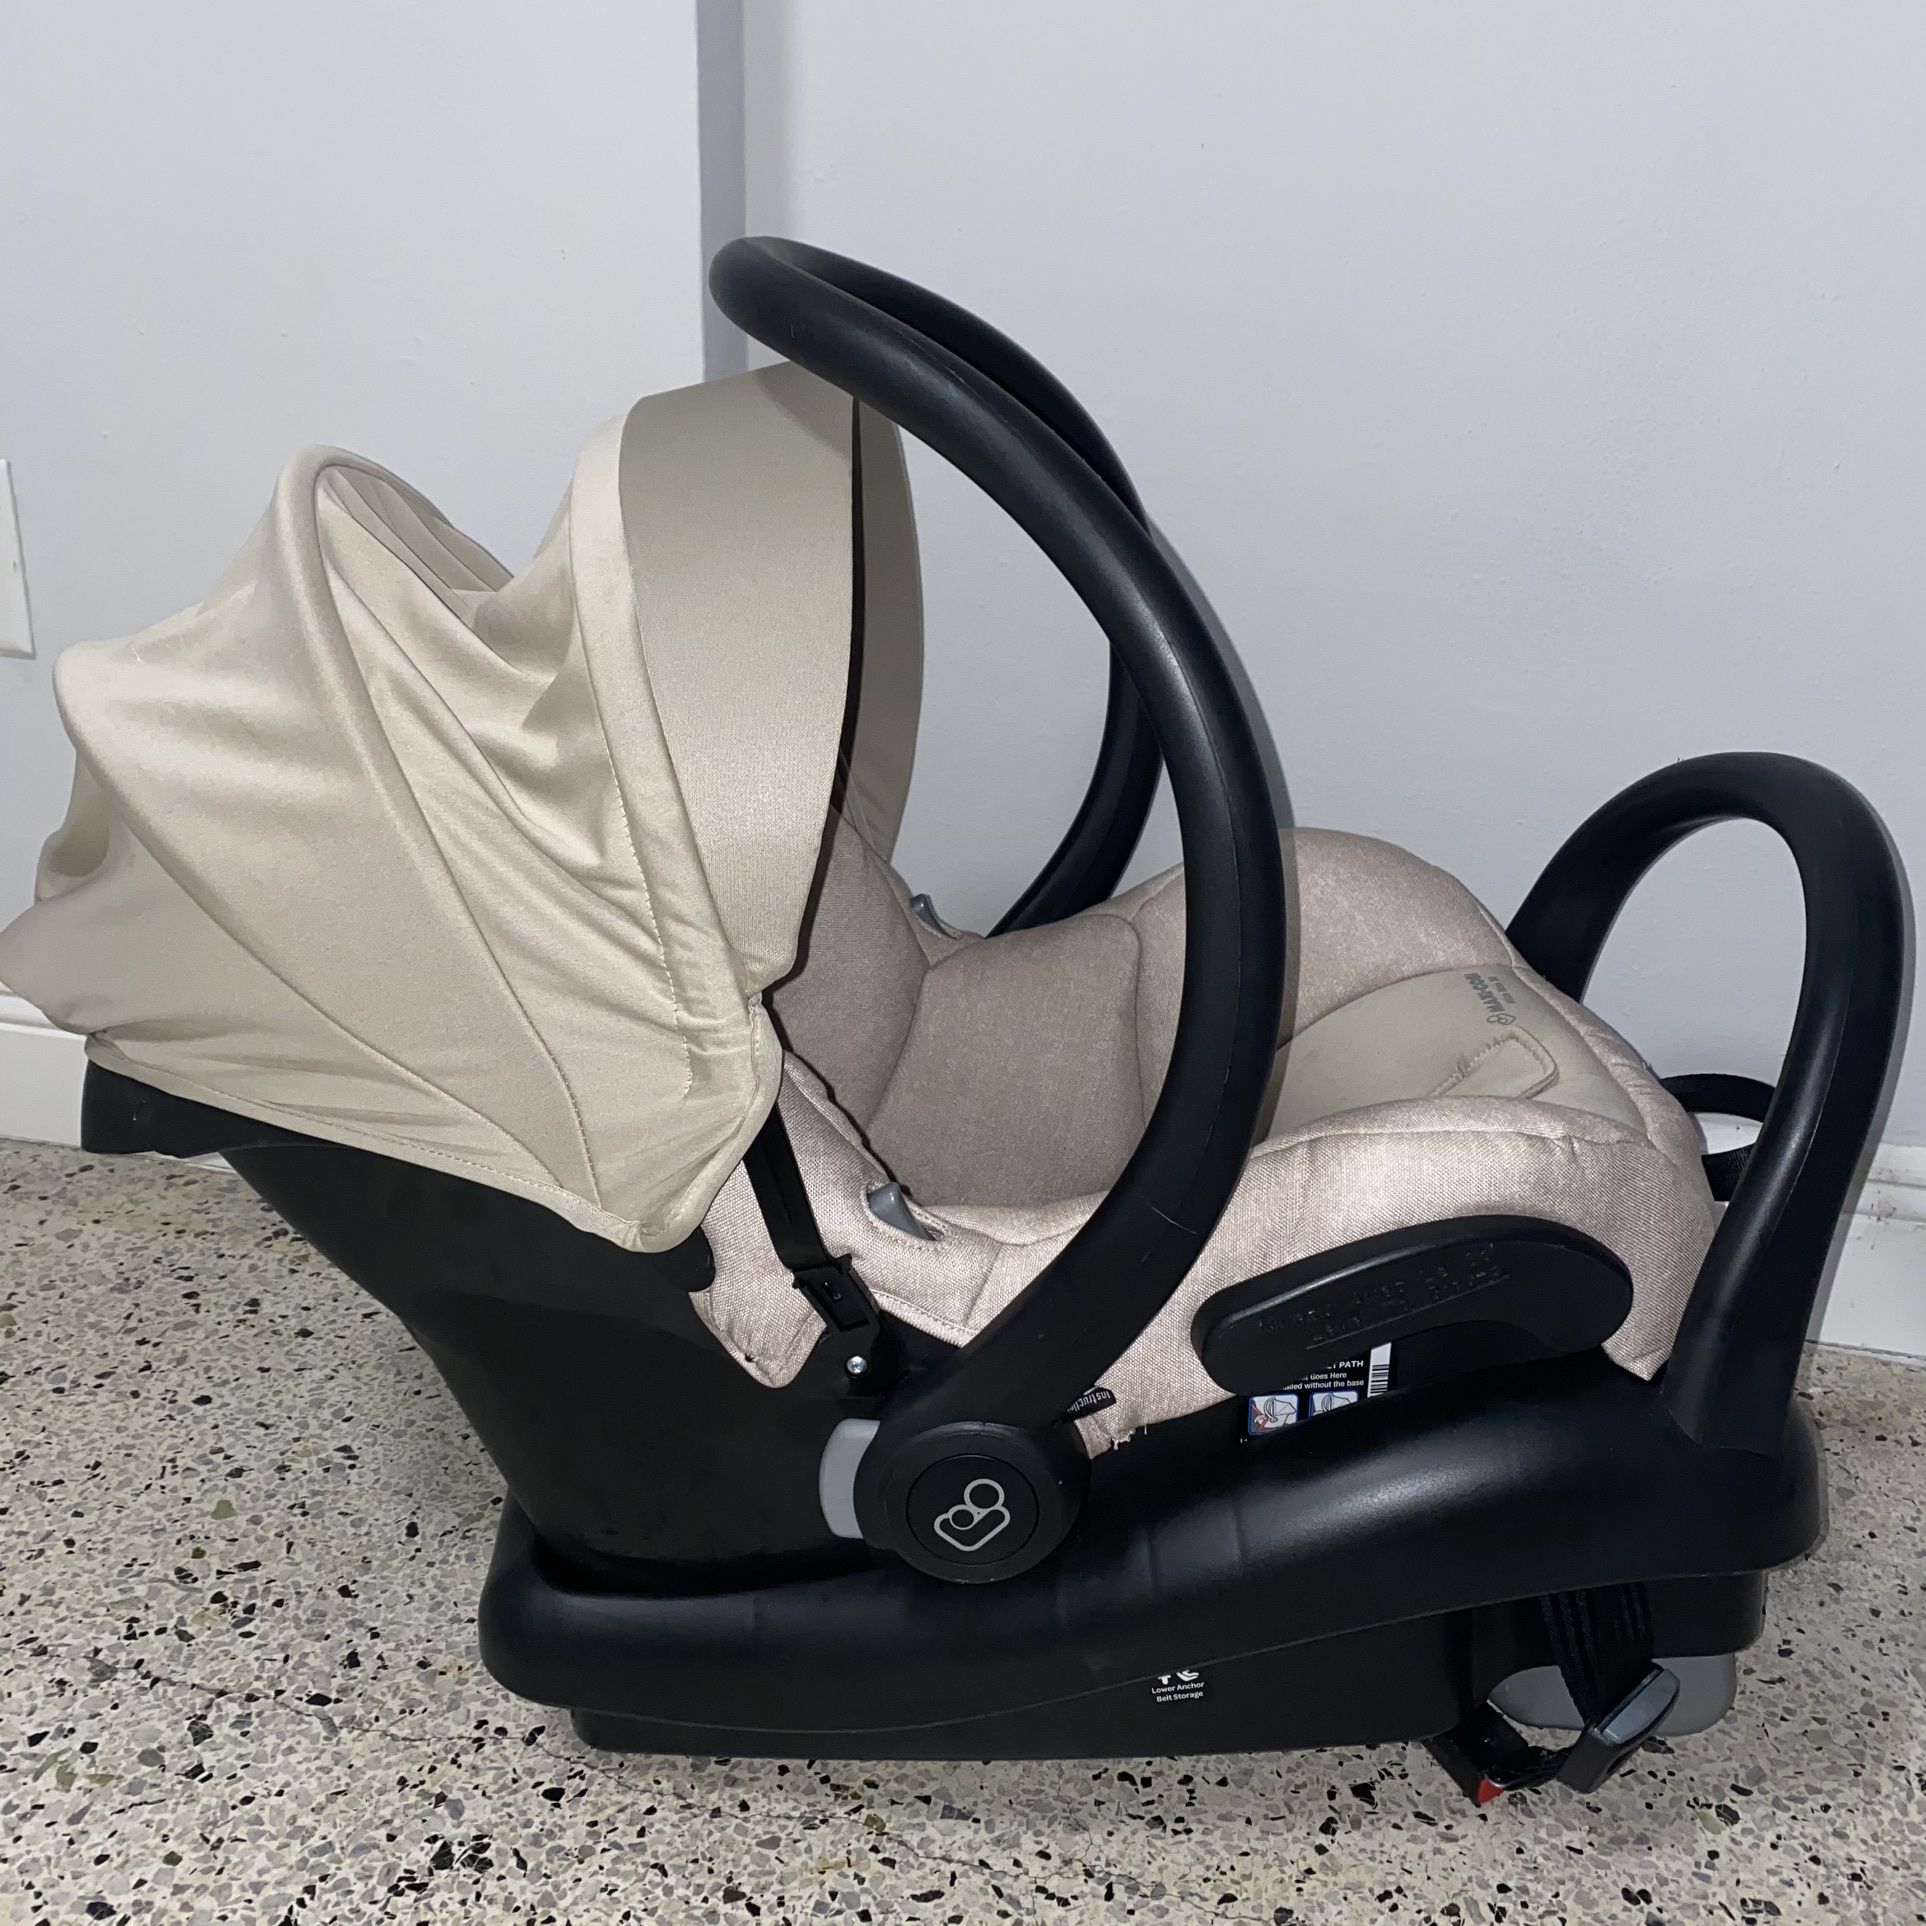 Maxi-Cosi Mico Max 30 Infant Car Seat in Nomad Sand